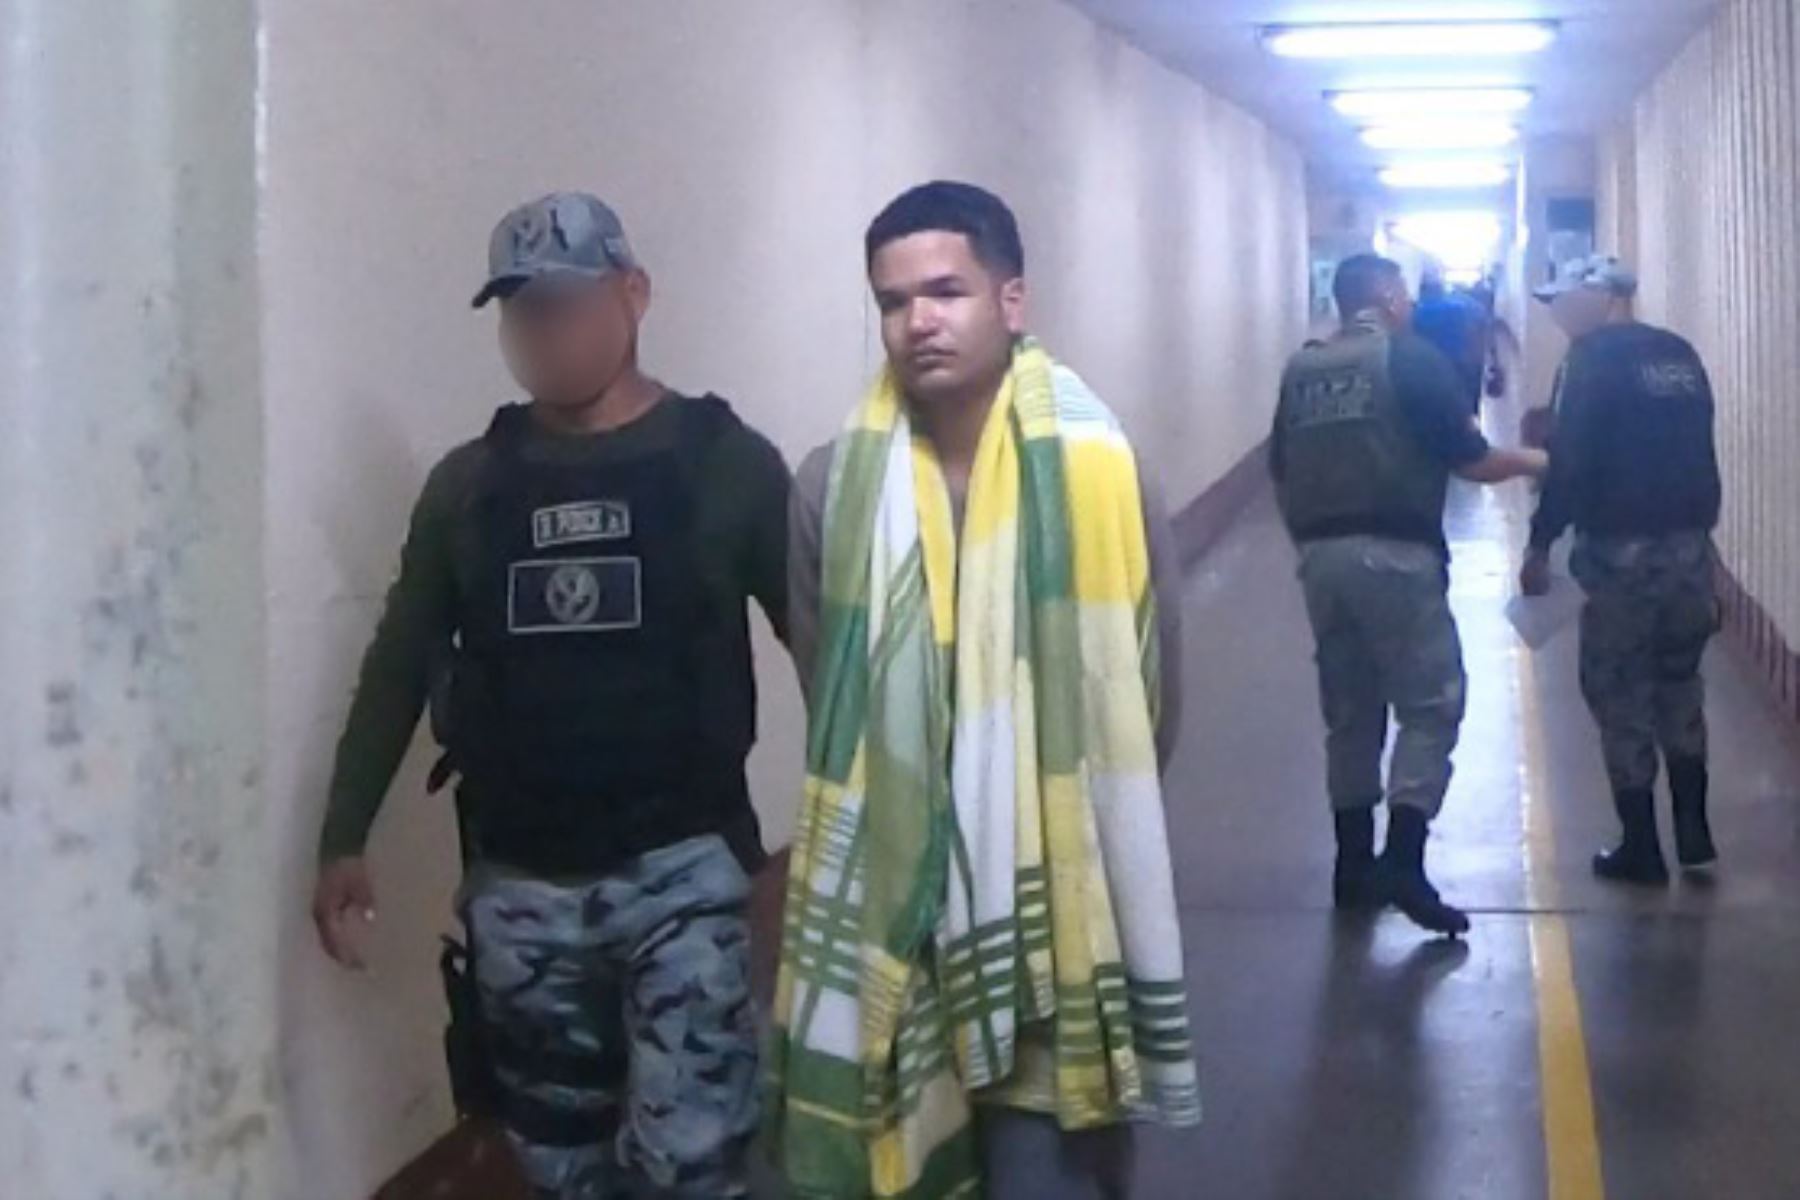 Ramses Abraham Rivas Villanueva y Cristhian David Zabala Rondon cumplen prisión preventiva por el delito de organización criminal. ANDINA/ INPE.